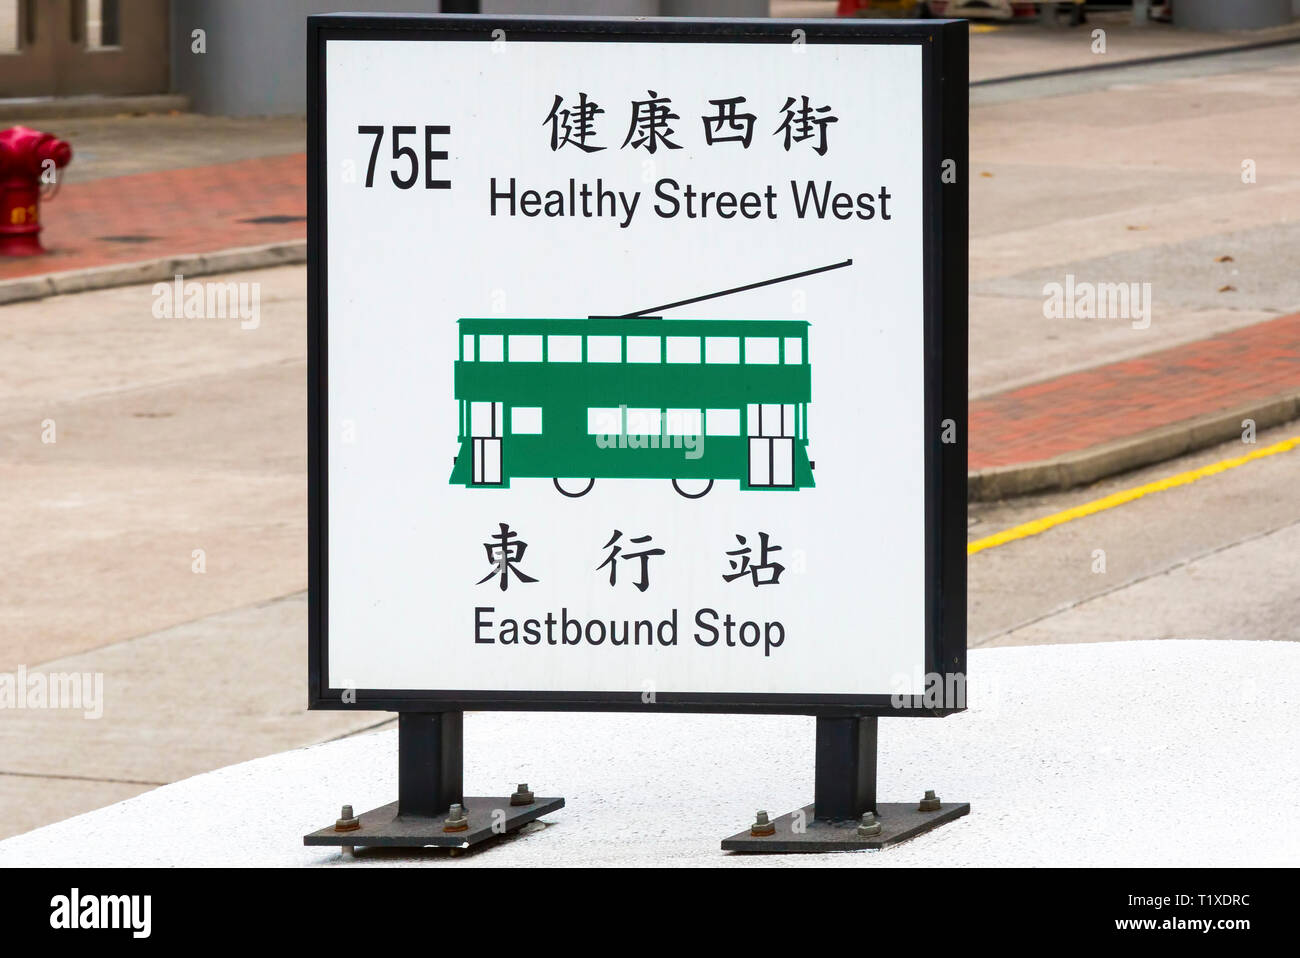 Location sign for tram stop at Healthy Street West, Hong Kong, SAR, China Stock Photo